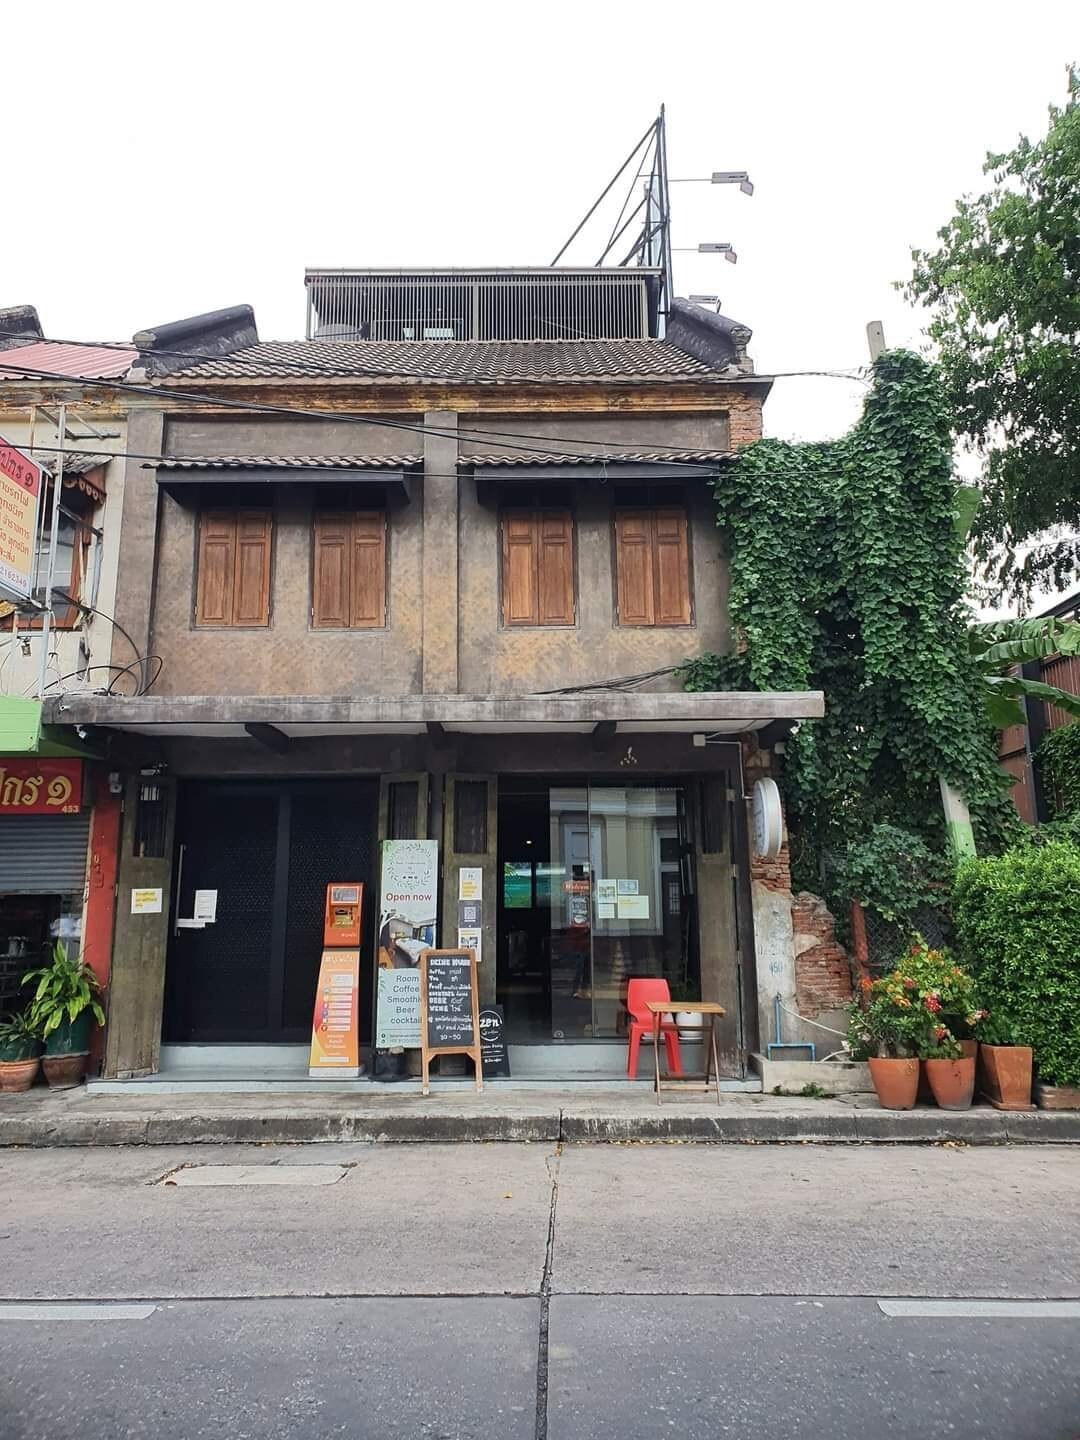 Baan Wualamphong, Lampong Cow House